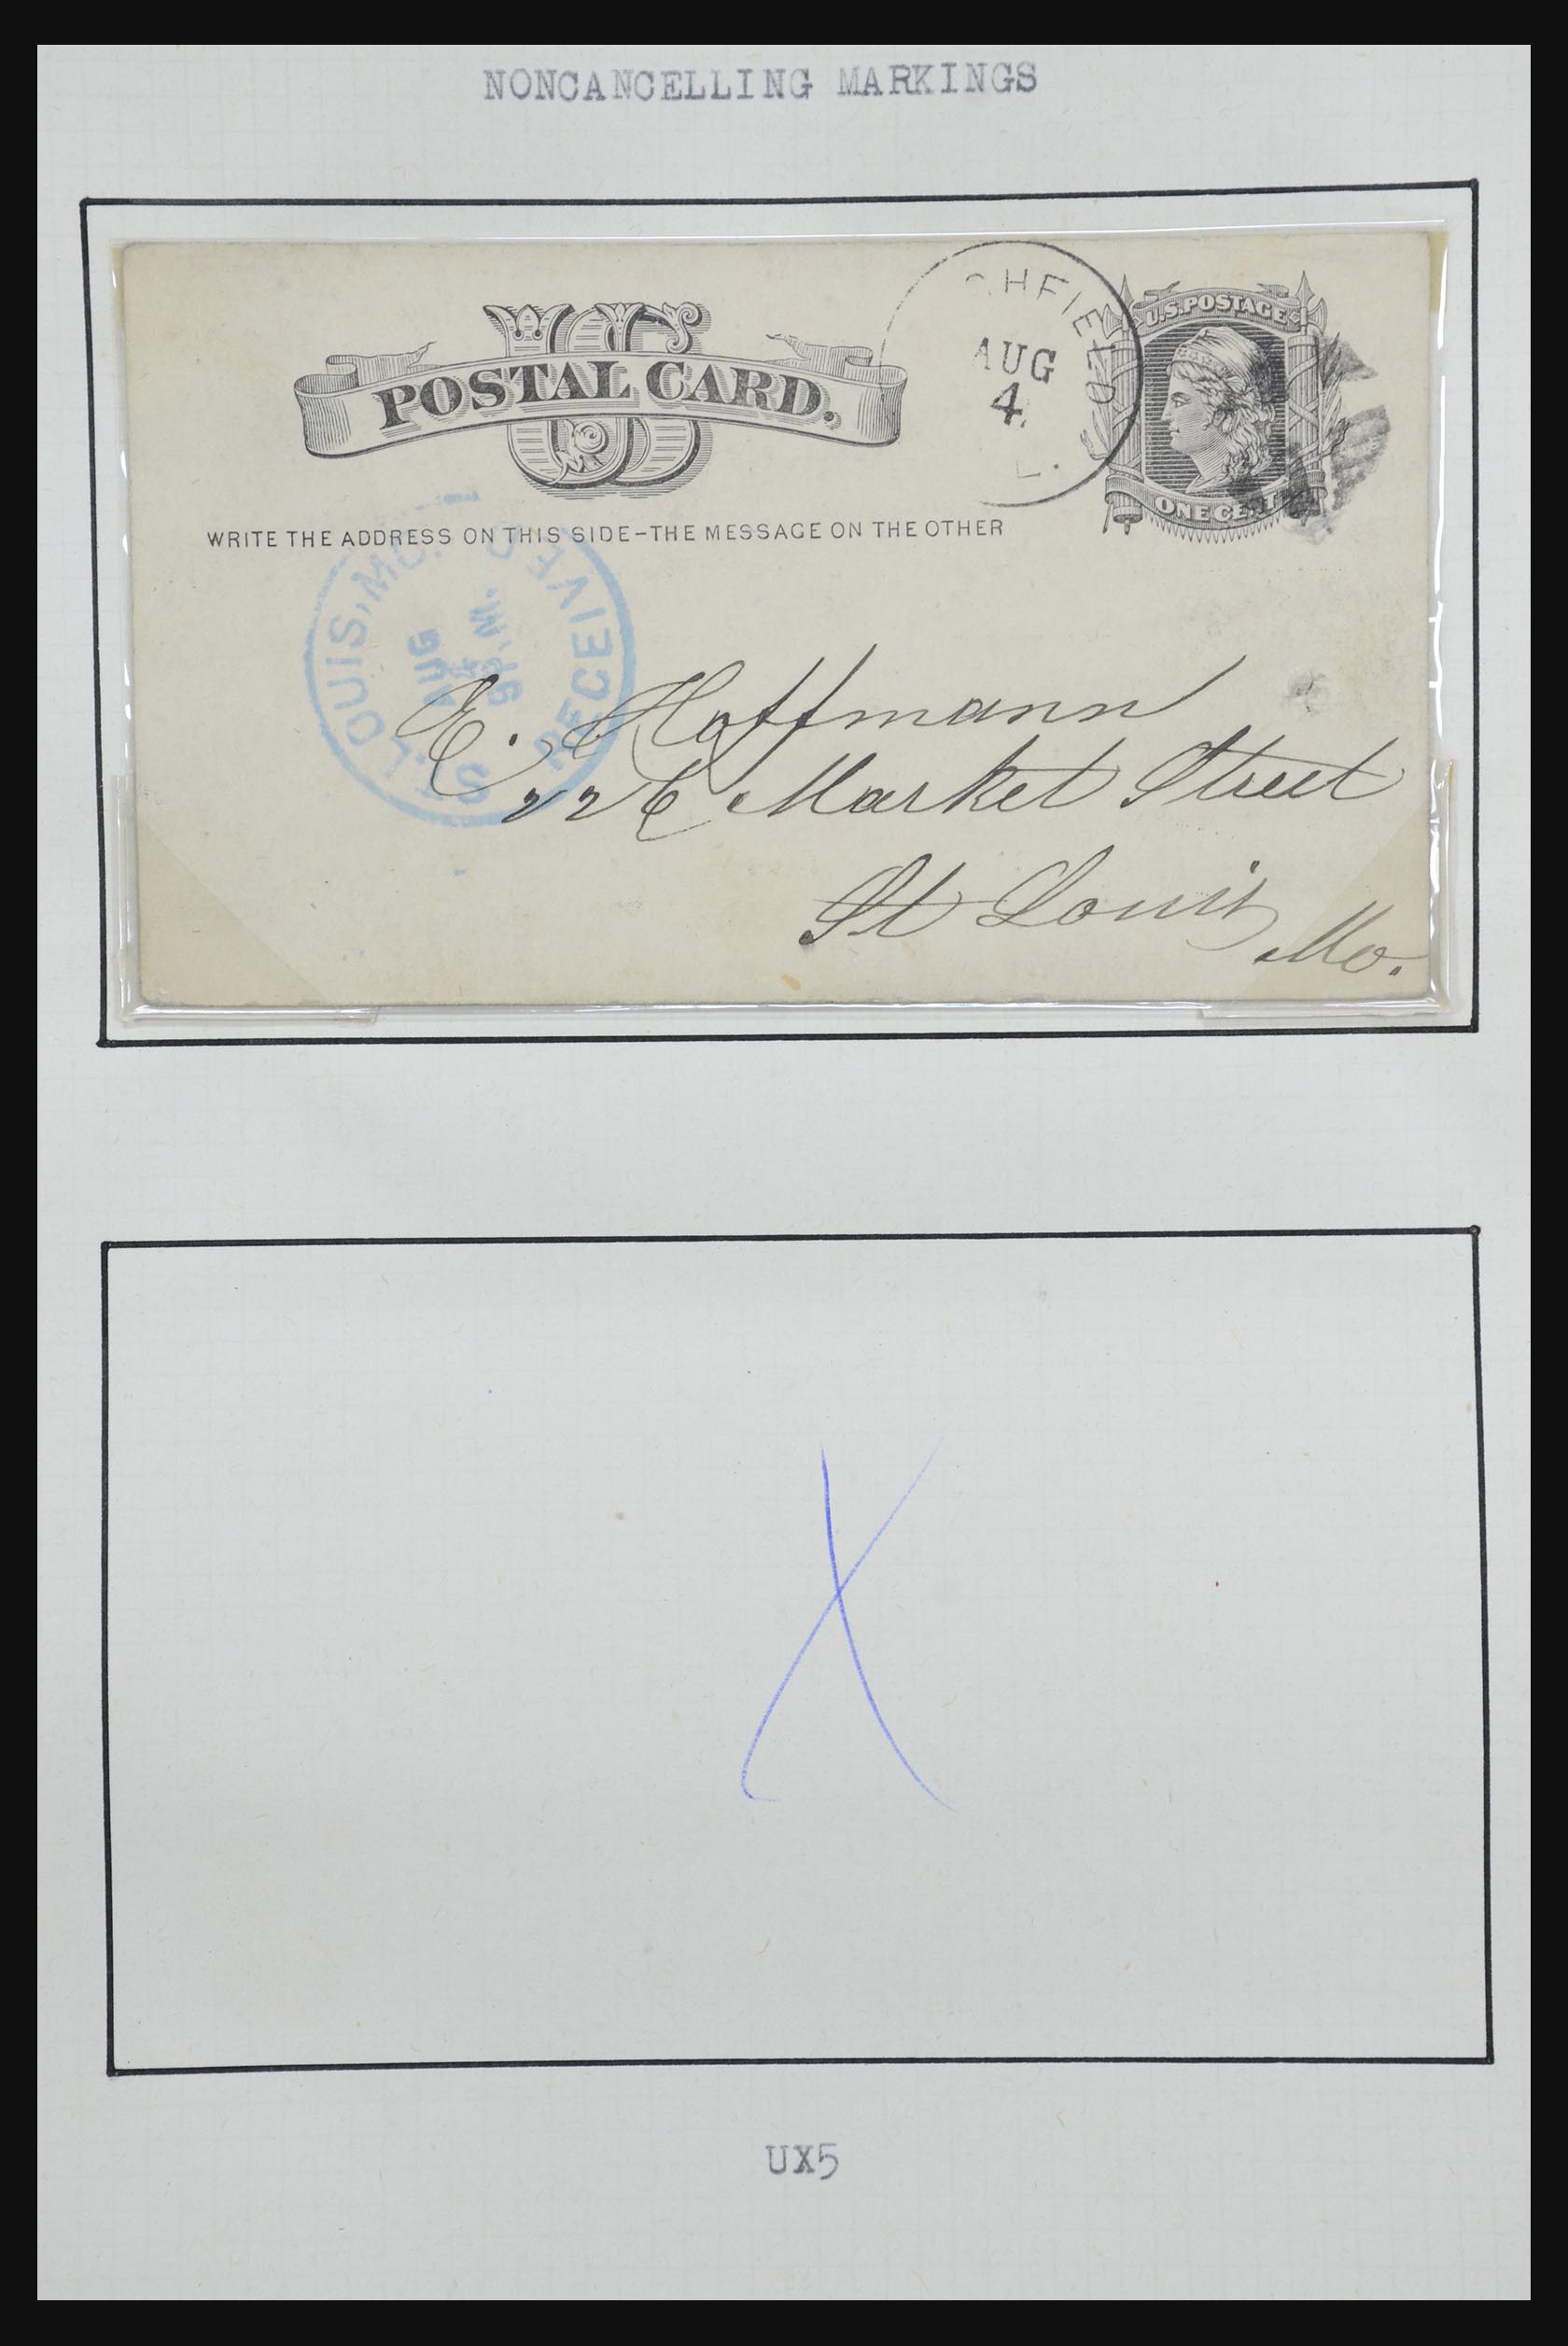 32209 046 - 32209 USA postal cards 1873-1950.